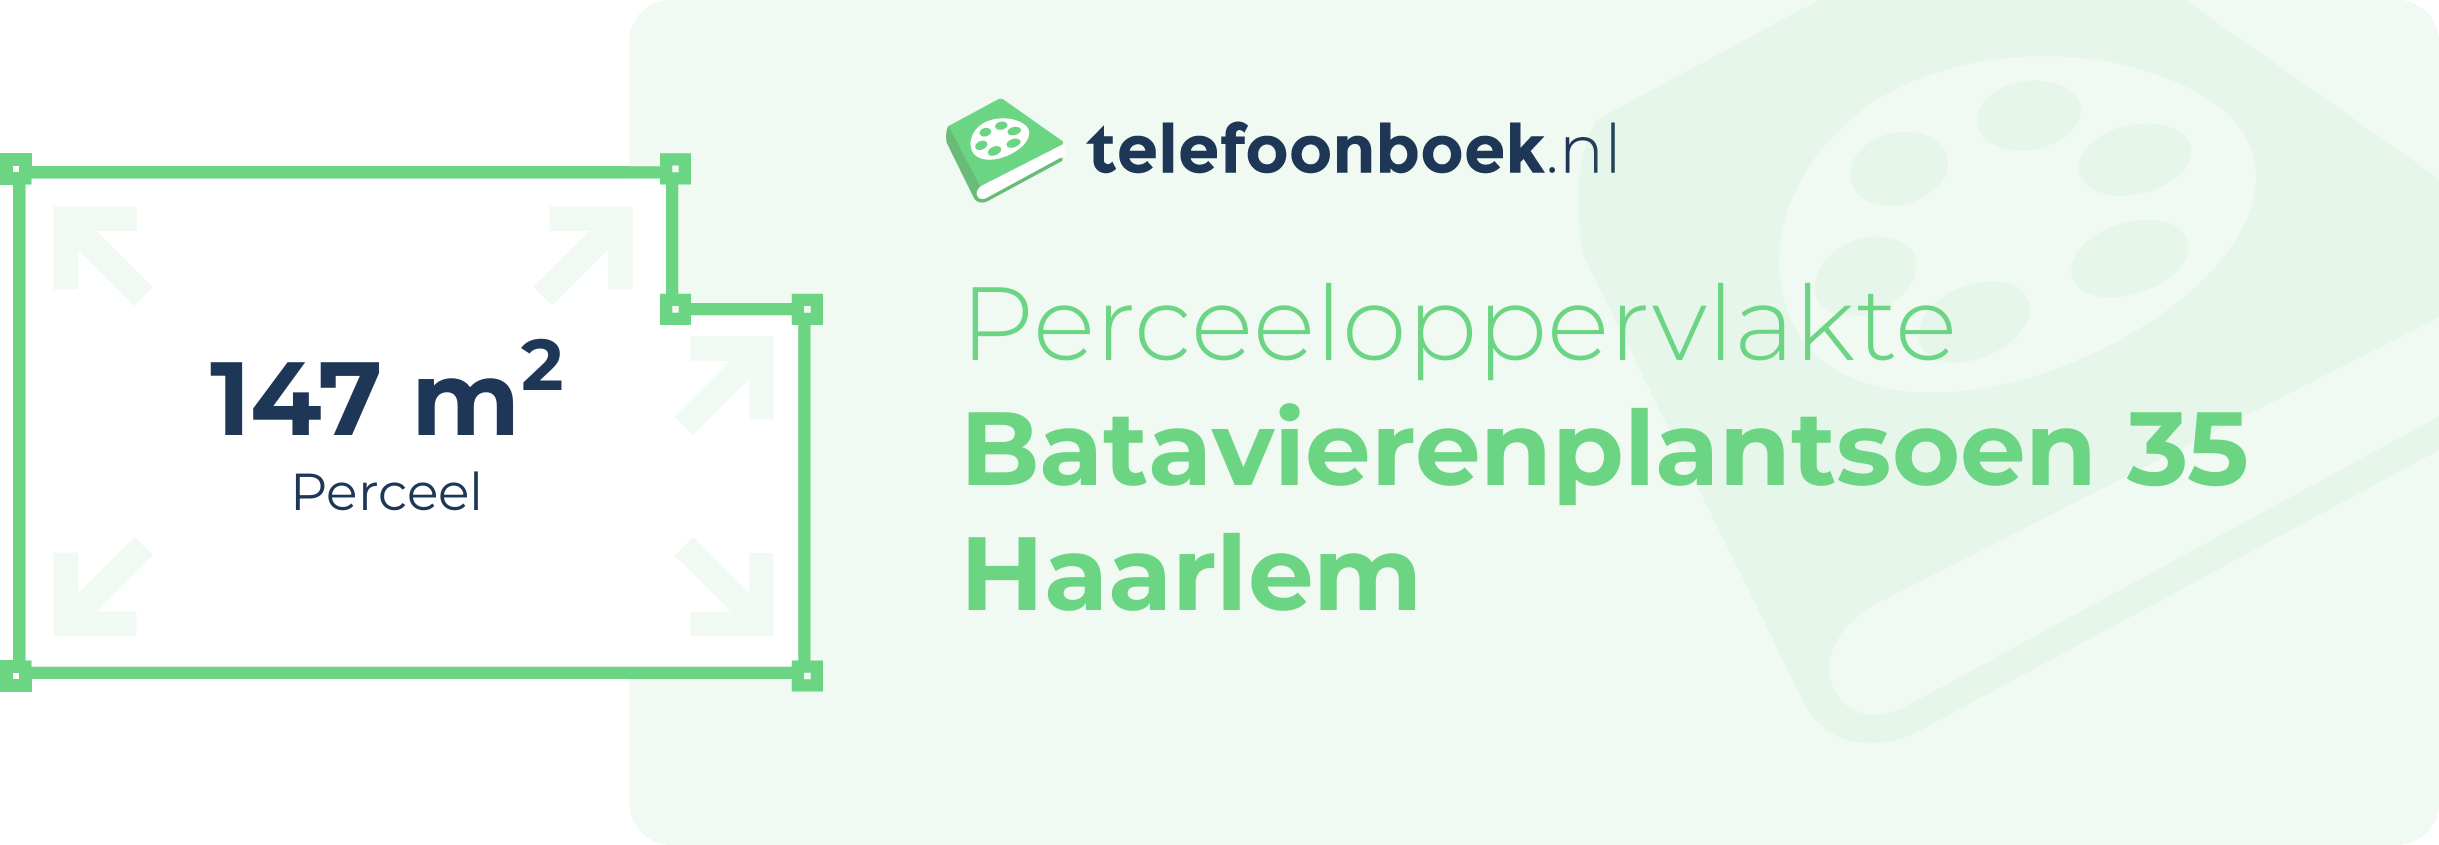 Perceeloppervlakte Batavierenplantsoen 35 Haarlem